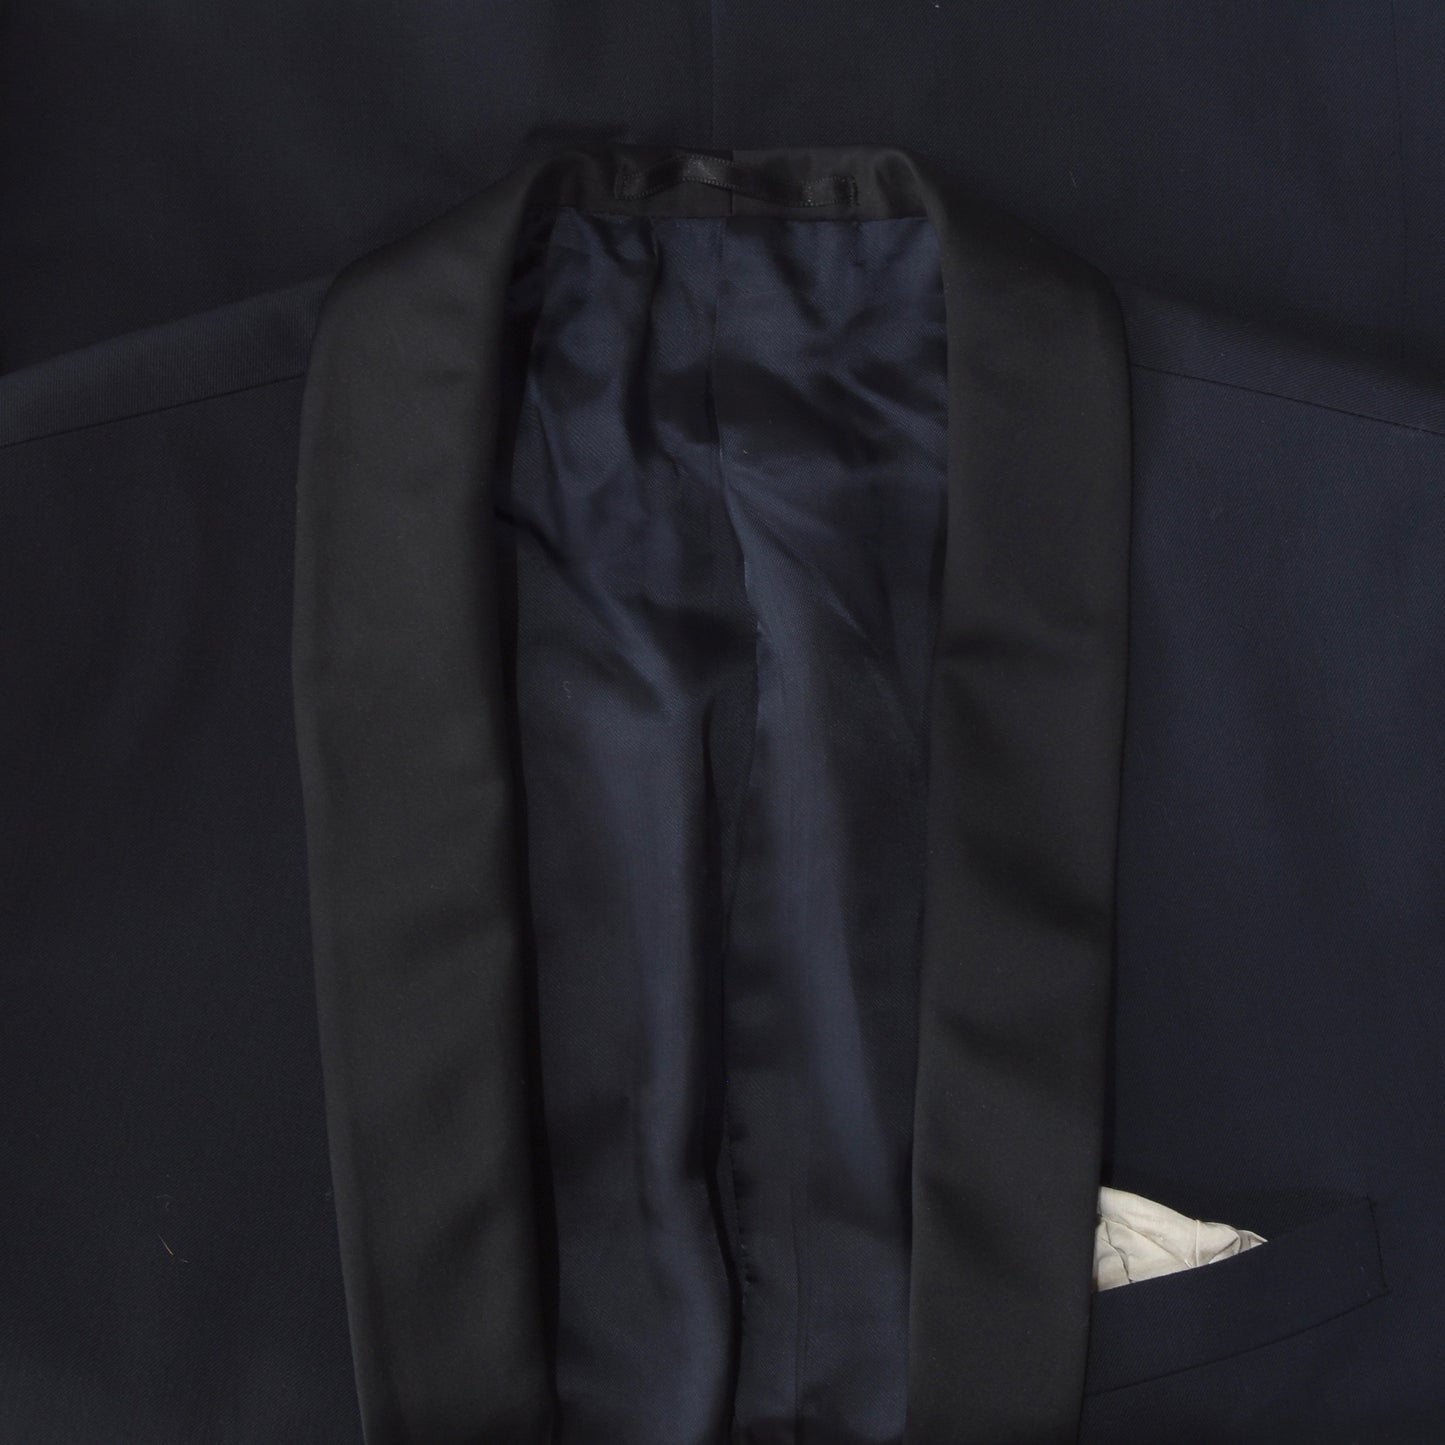 Lanvin x H&M 2010 Tuxedo Jacket Size 48 - Navy Blue